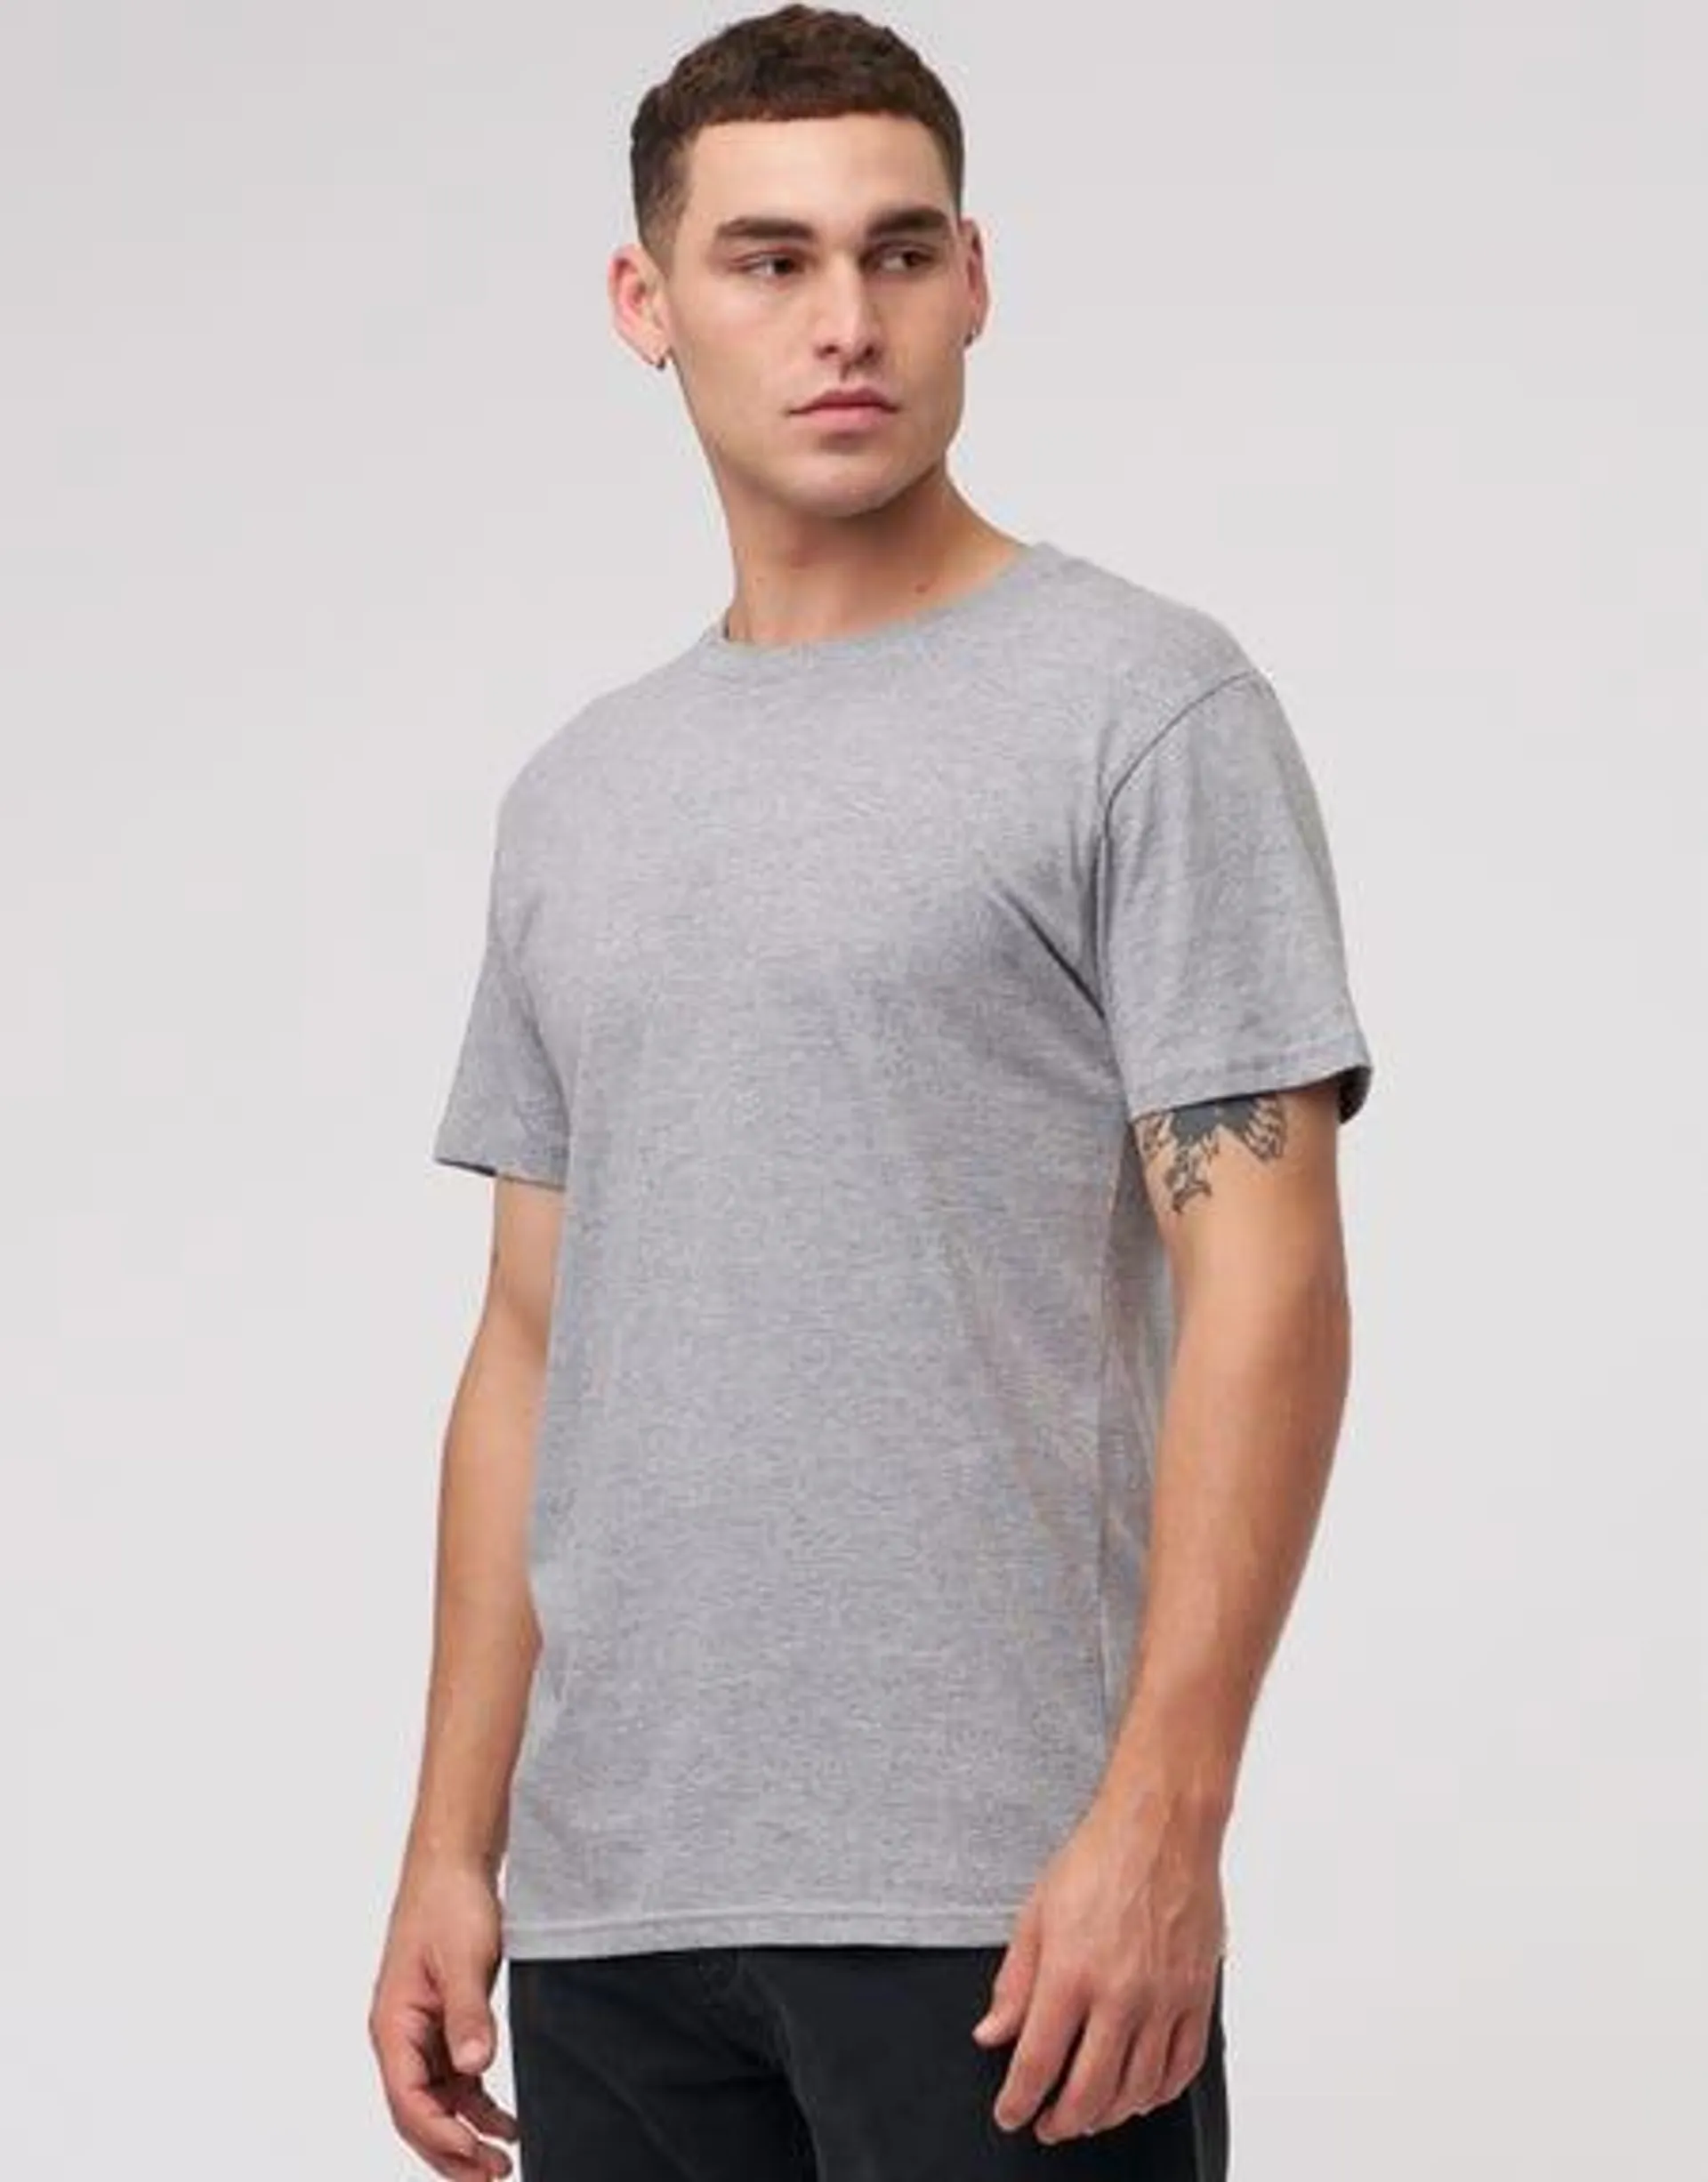 Organic Crew Neck Basic T Shirt in Grey Marl